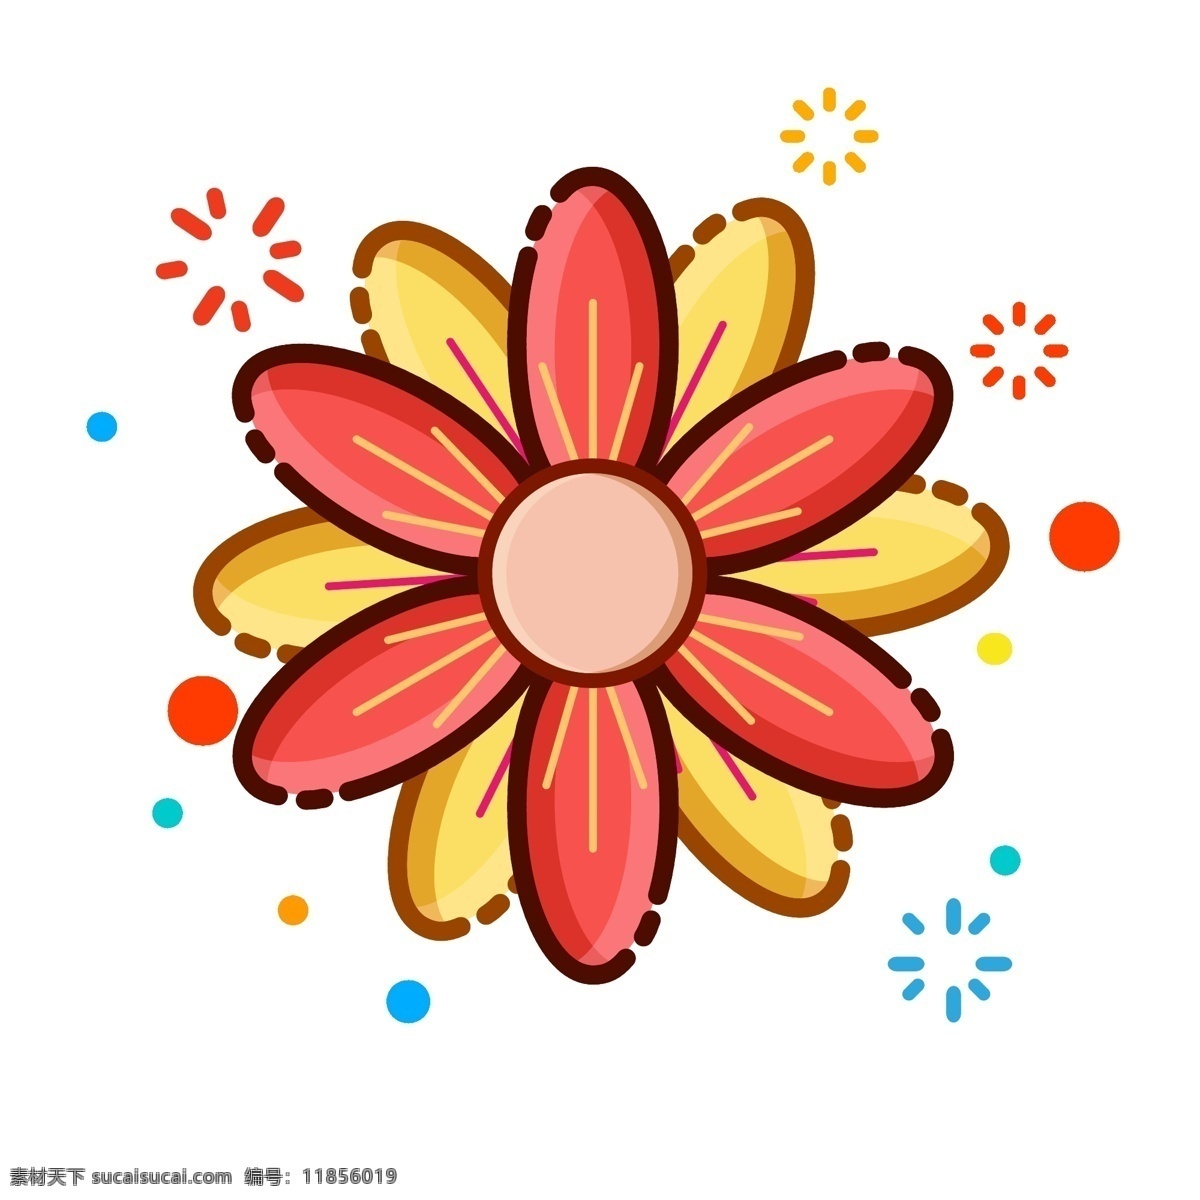 mbe 卡通 手绘 彩色 花朵 植物 花卉 可爱 矢量